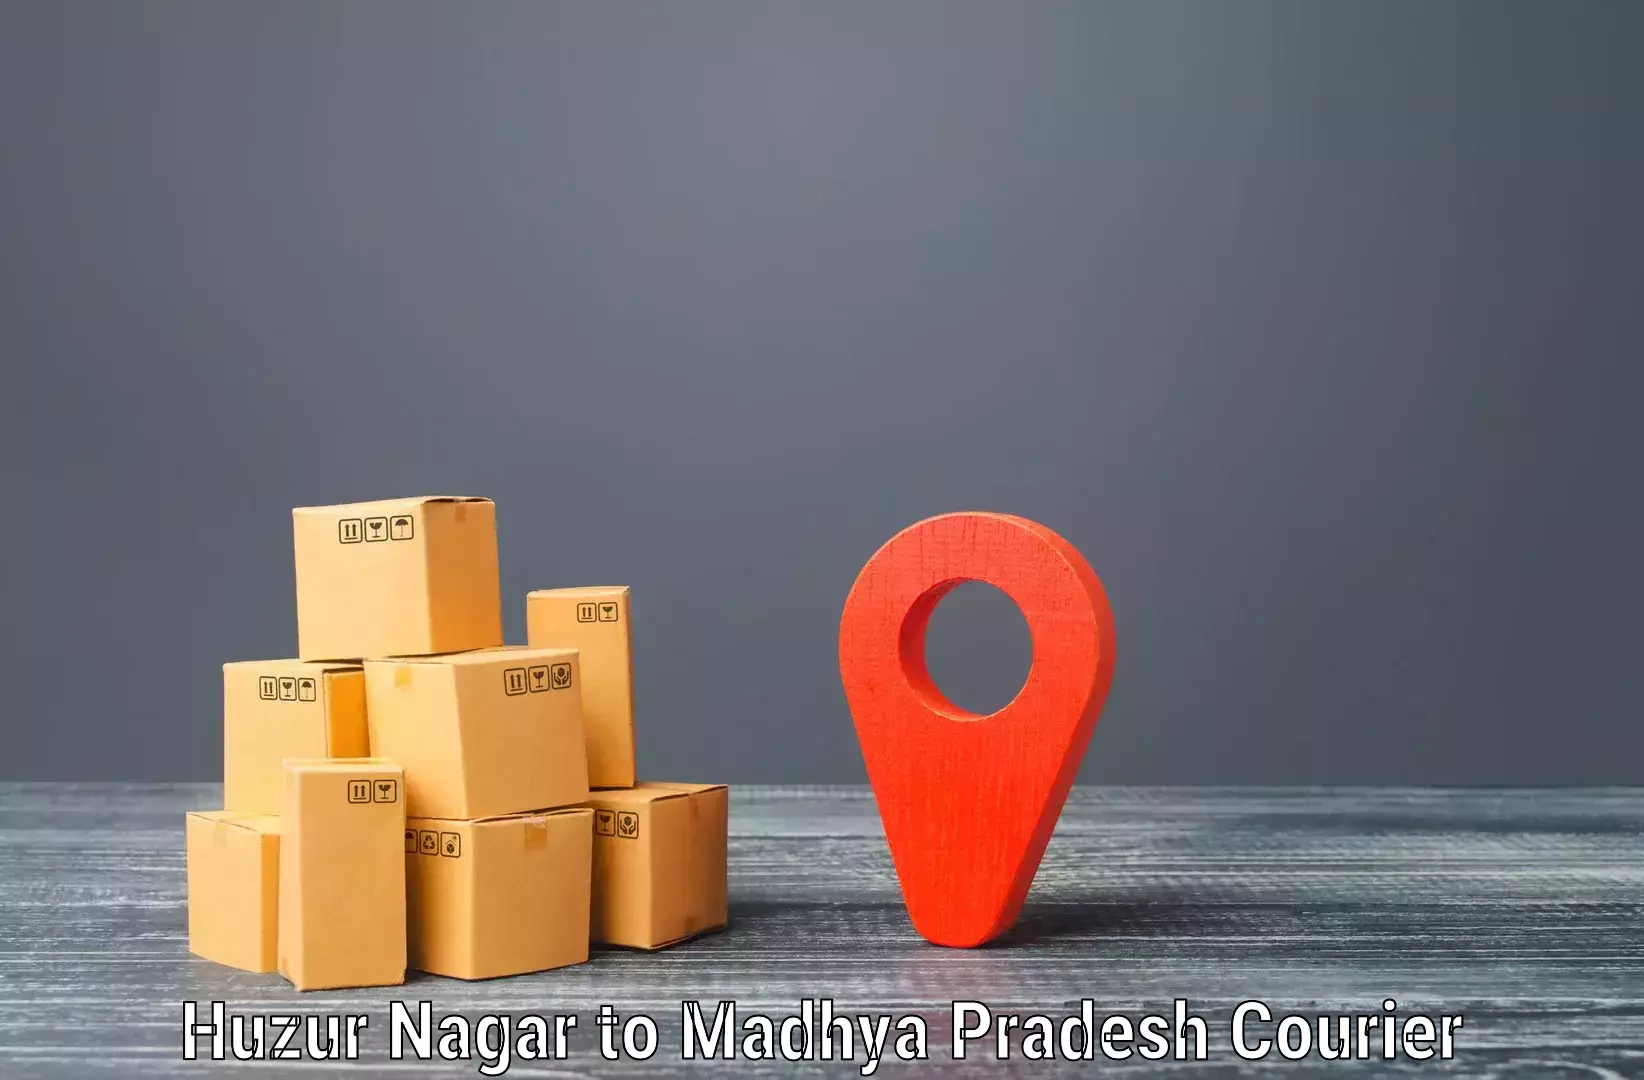 Tech-enabled shipping Huzur Nagar to Bichhiya